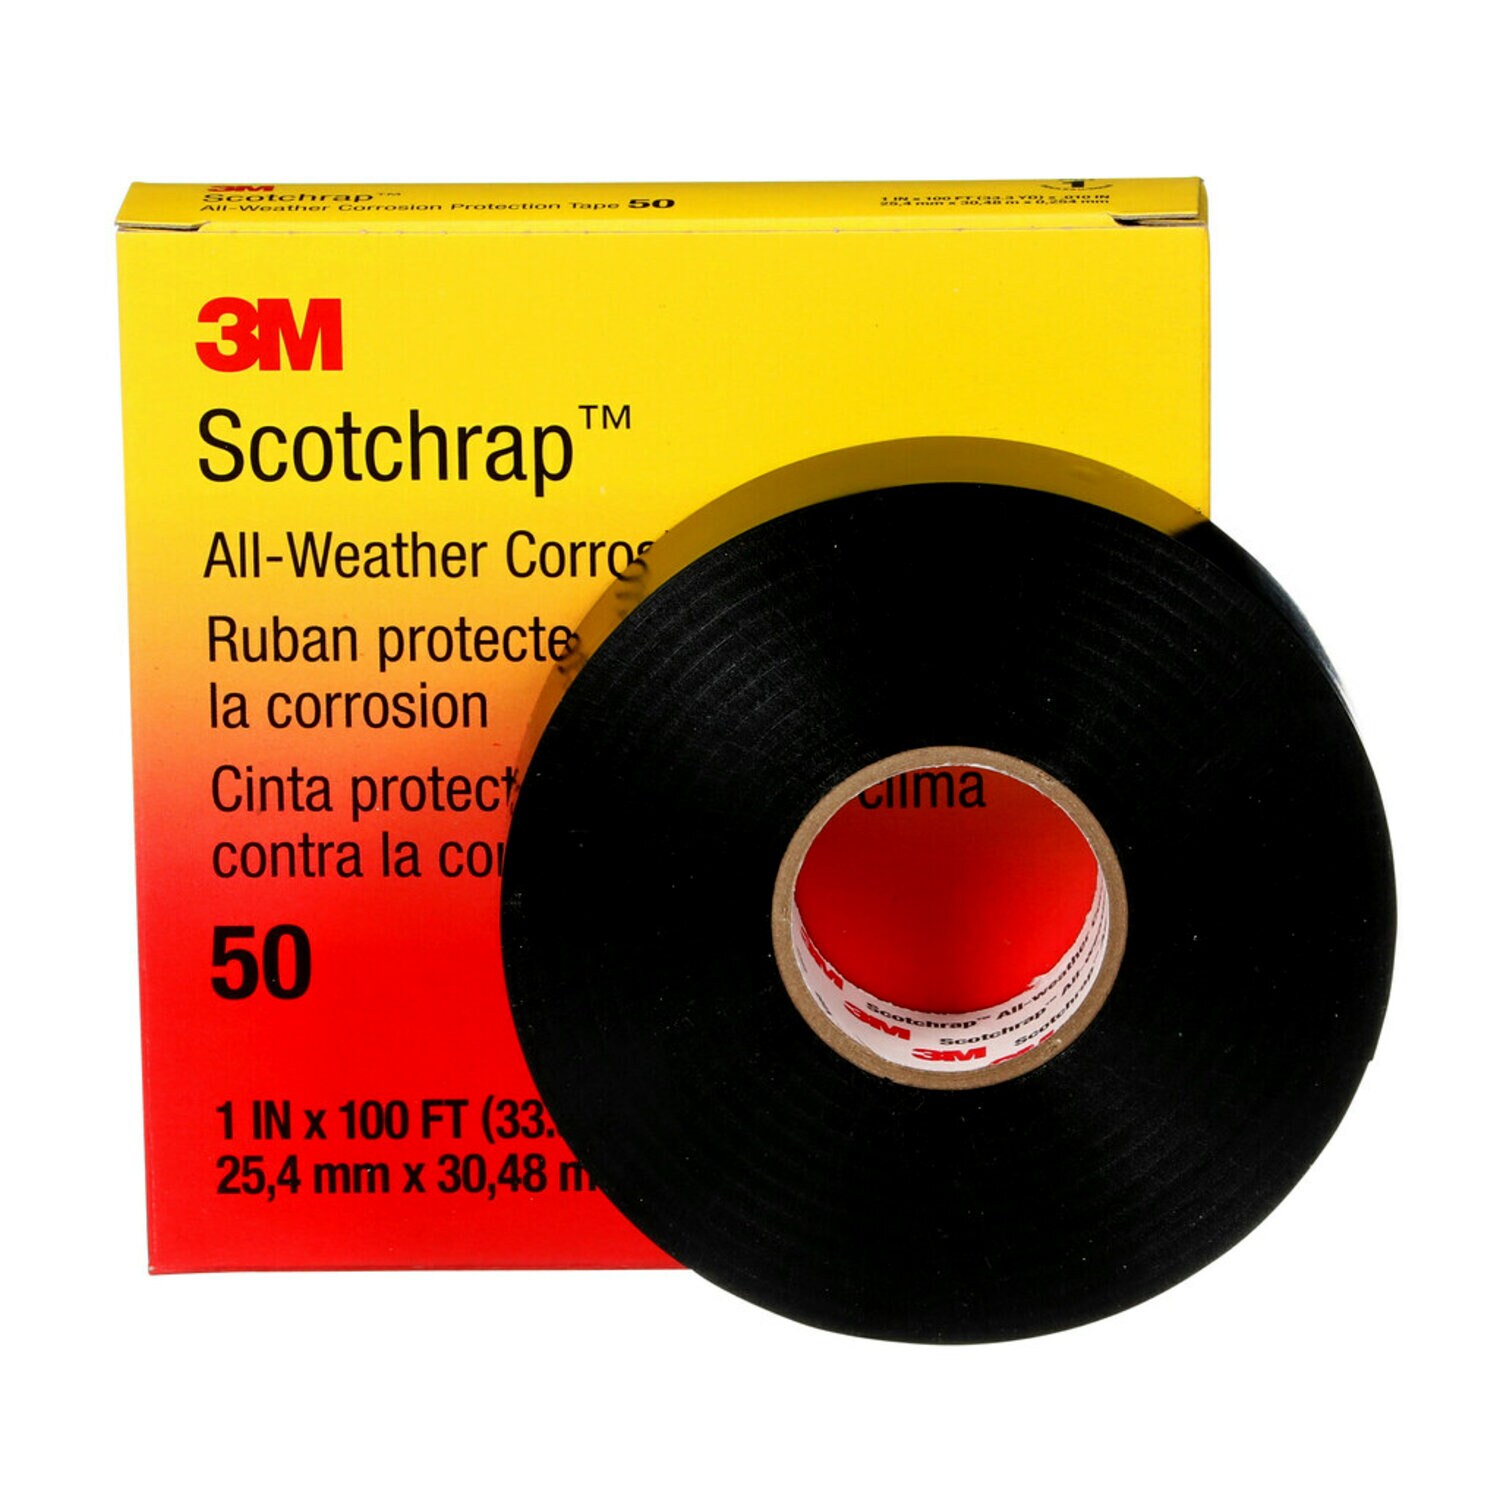 7000057501 - 3M Scotchrap Vinyl Corrosion Protection Tape 50, 1 in x 100 ft,
Unprinted, Black, 1 roll/carton, 10 rolls/Case